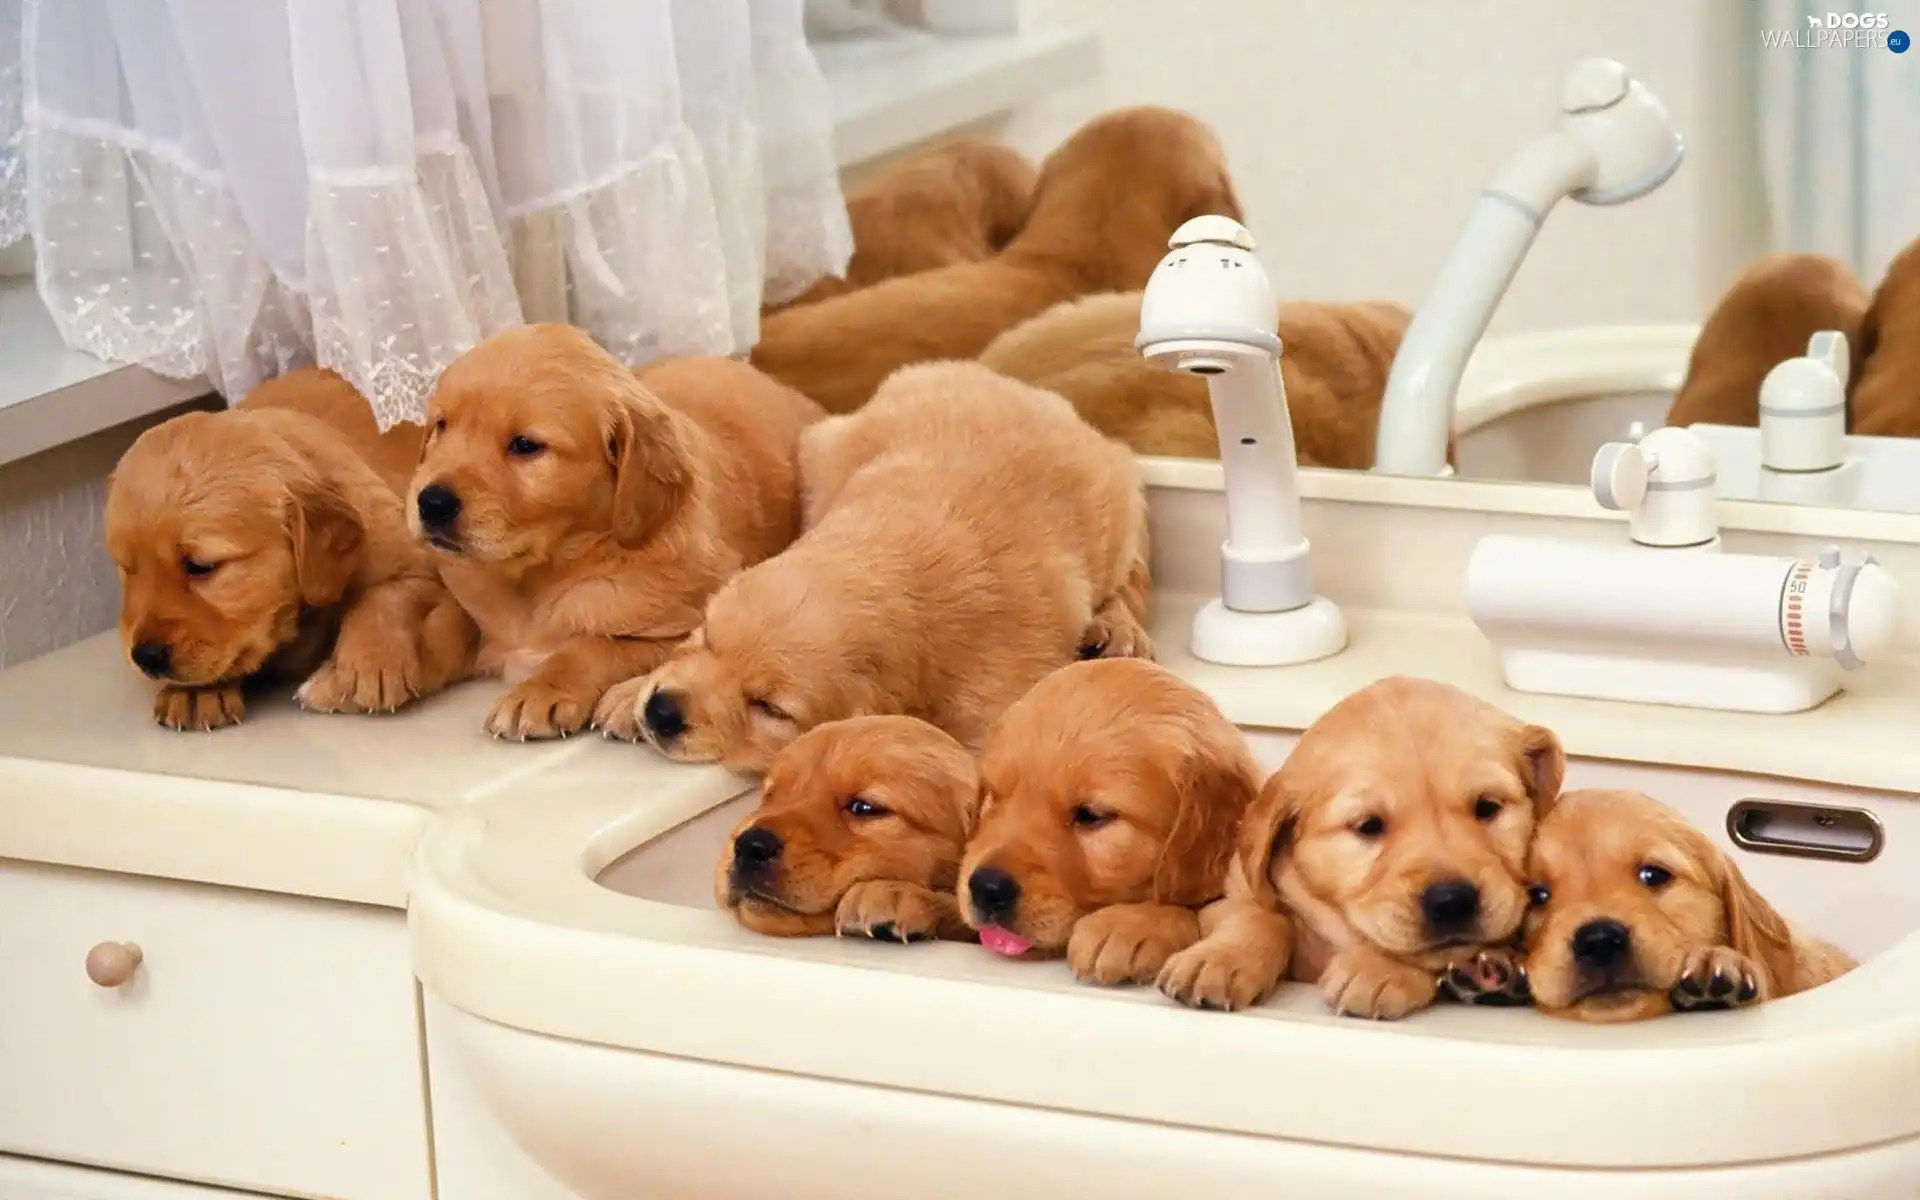 Bathroom, wash-stand, puppies